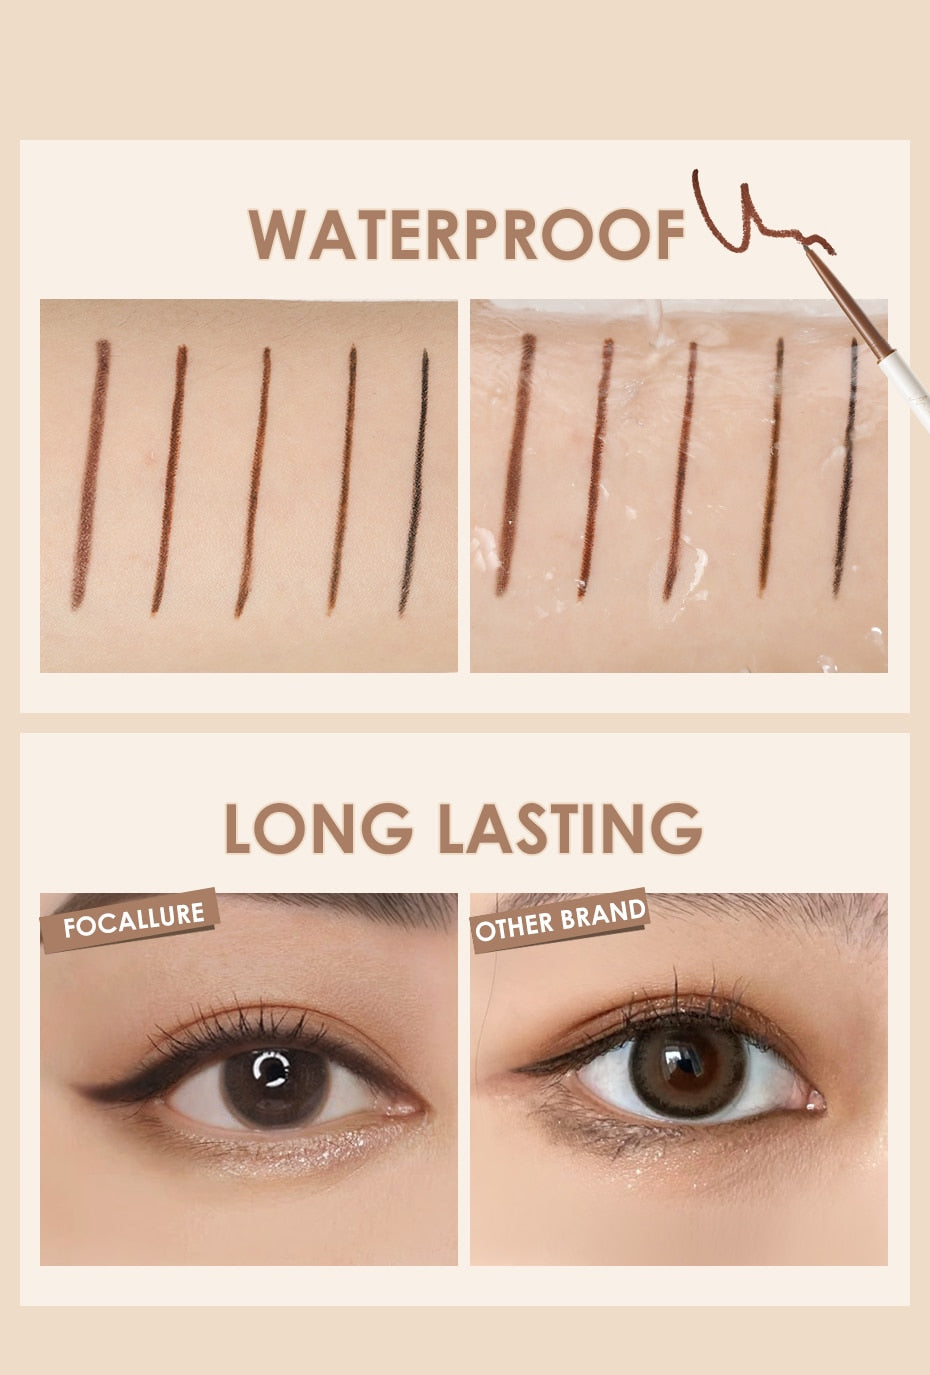 Waterproof Eyeliner Gel Ultra-slim 1.7mm Soft, High Pigment Professional DromedarShop.com Online Boutique